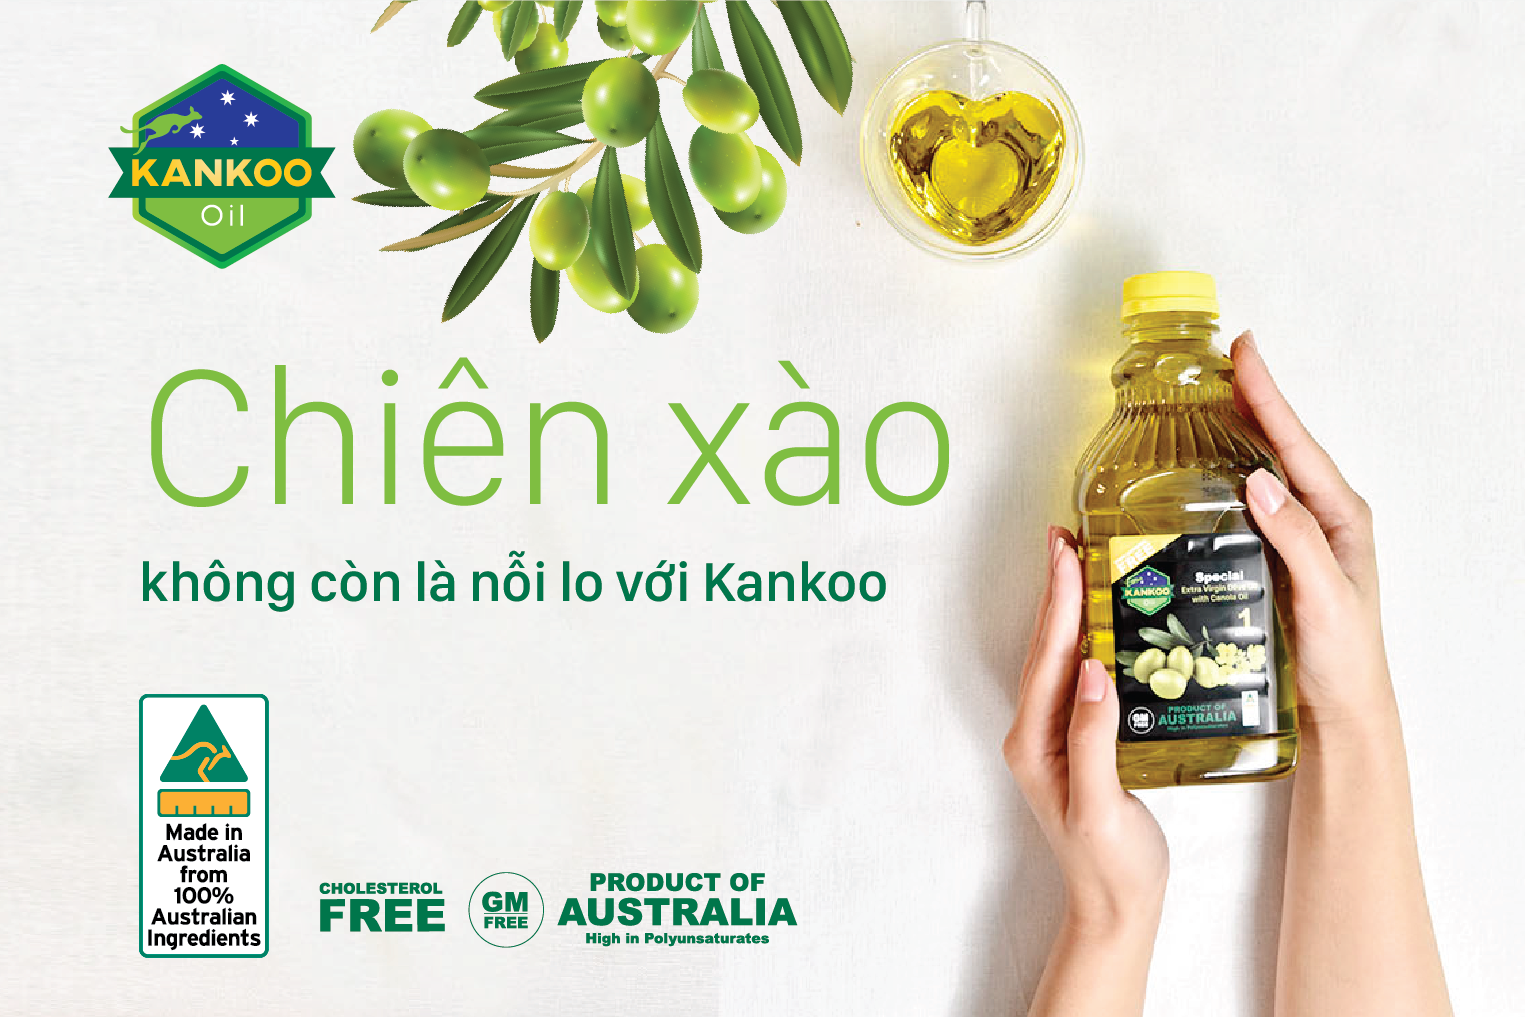 dầu oliu hạt cải extra virgin olive oil with canola oil hãng kankoo 2